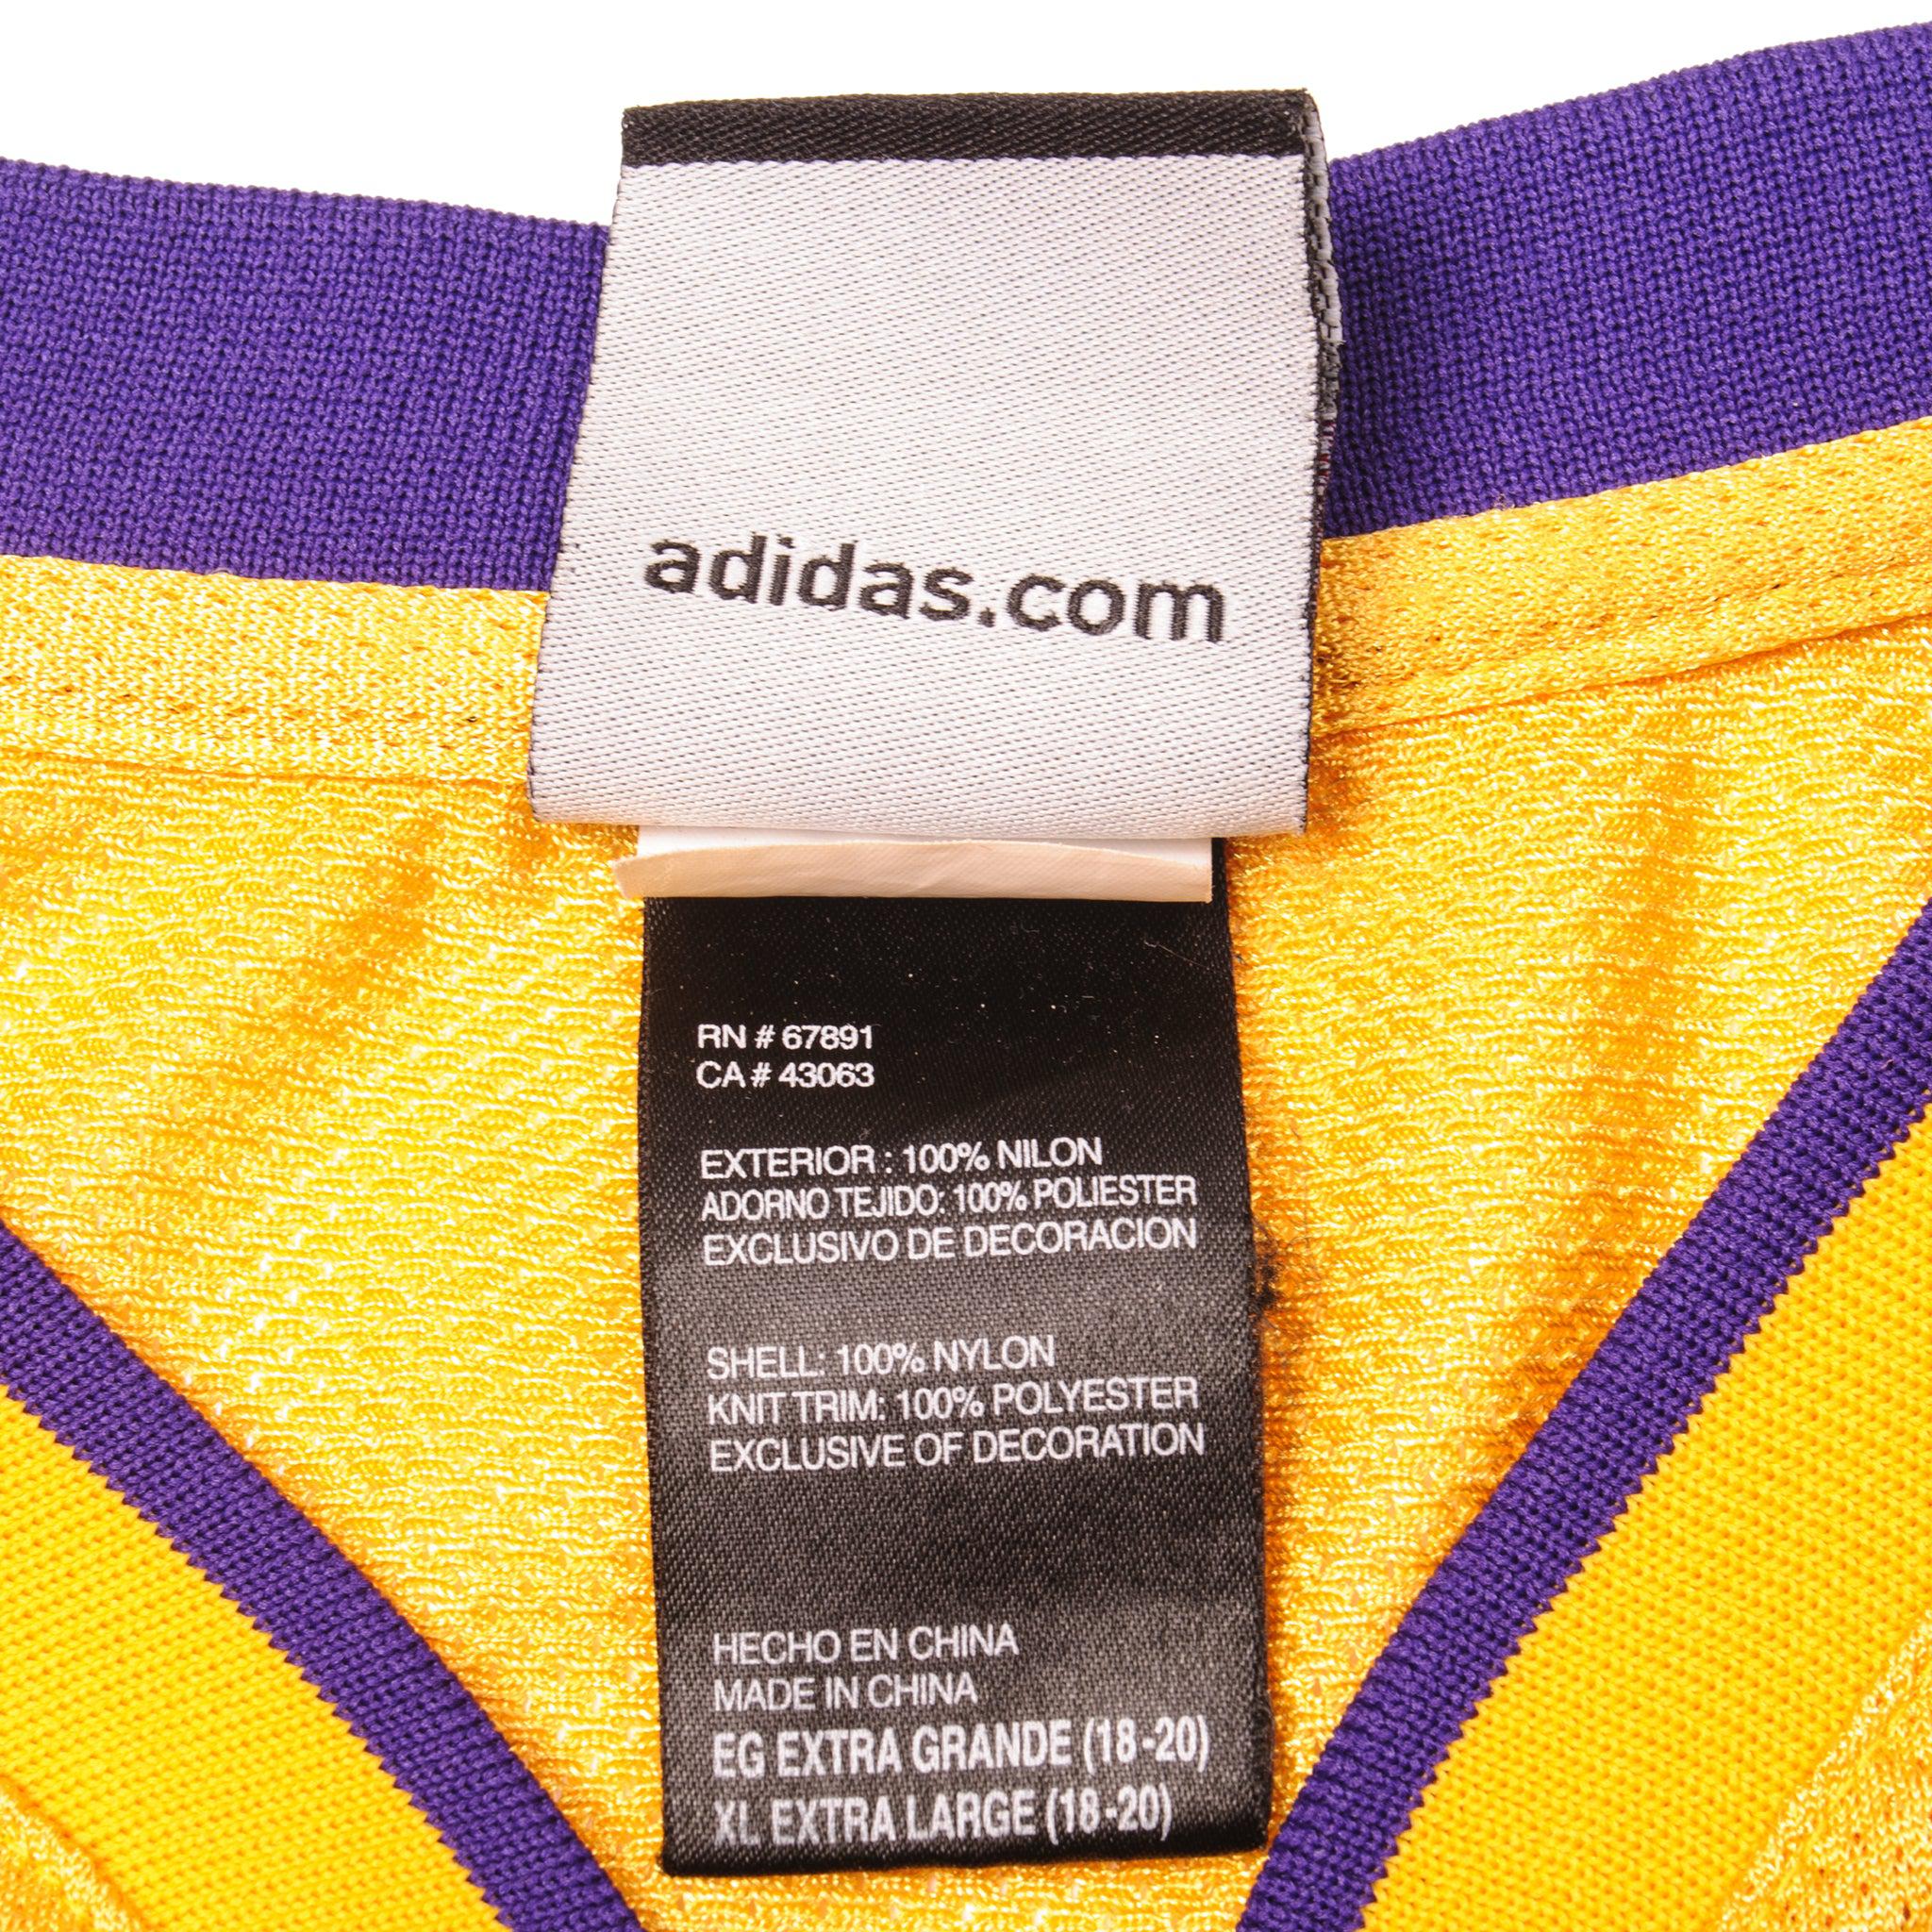 Adidas Authentic KOBE BRYANT #24 Los Angeles LA Lakers Jersey Size 56  basketball